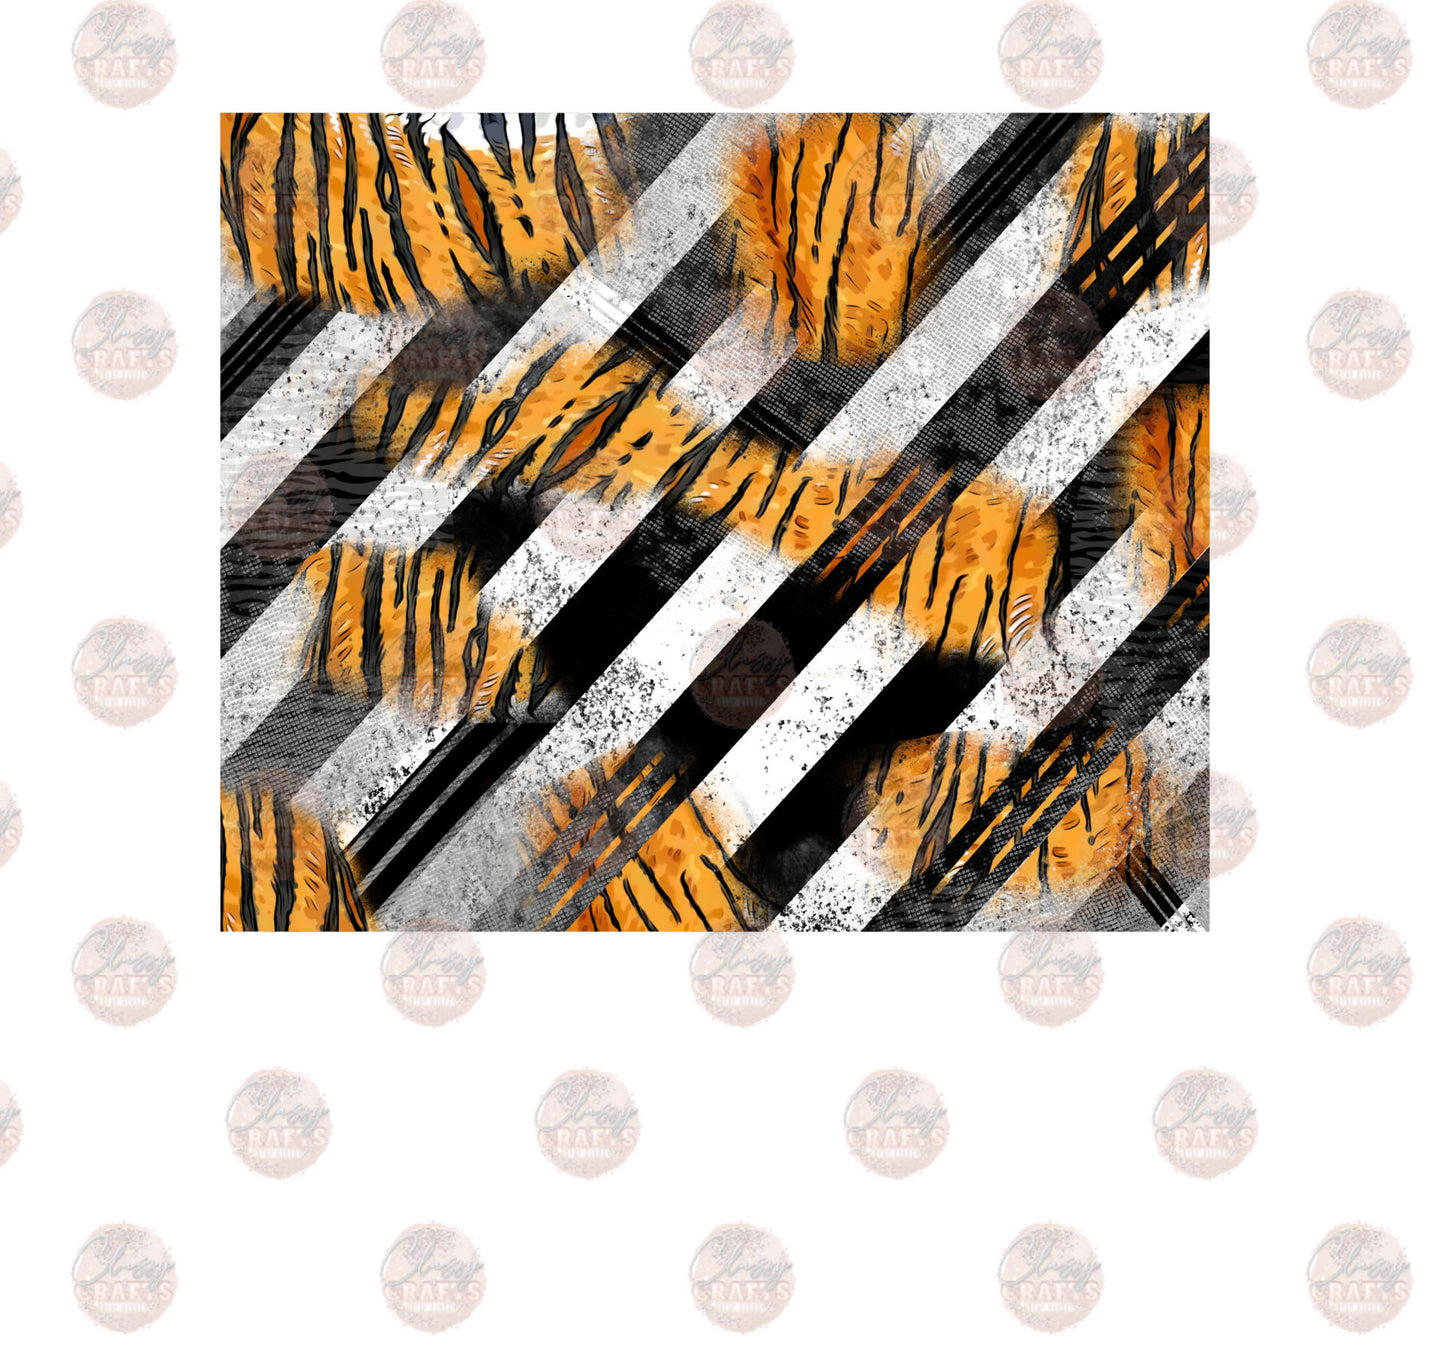 Fierce Tiger Sleeve Gray - Sublimation Transfer